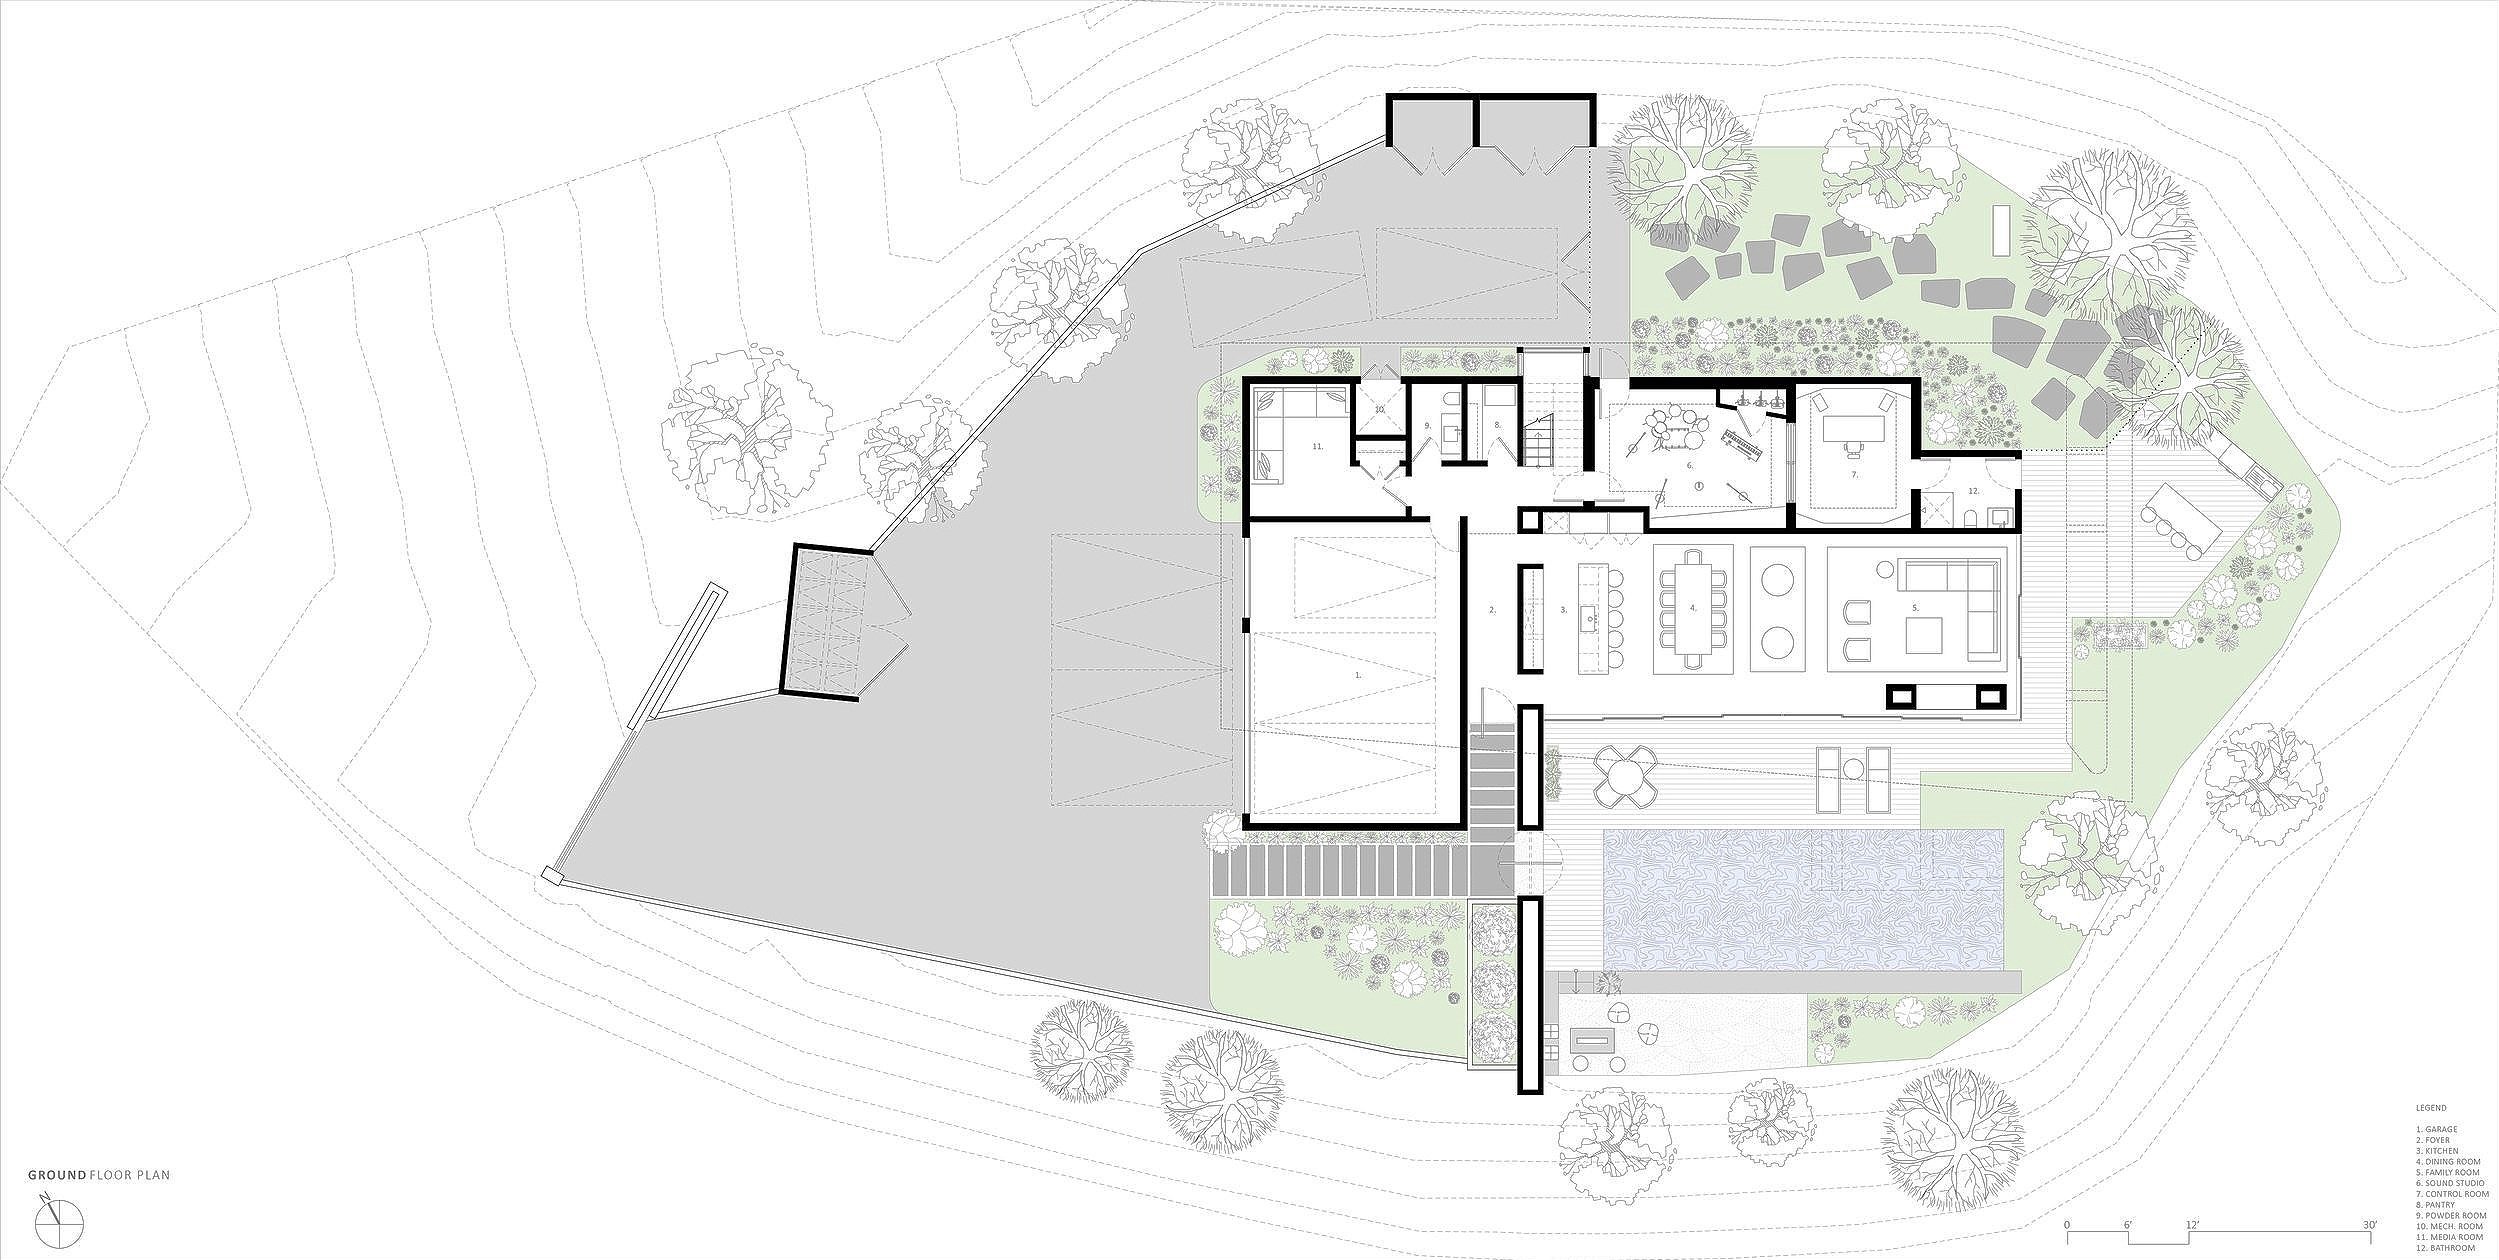 bspk-design-architecture-california-4300-residenital-panorama-house-ground+level+floor+plan.jpg